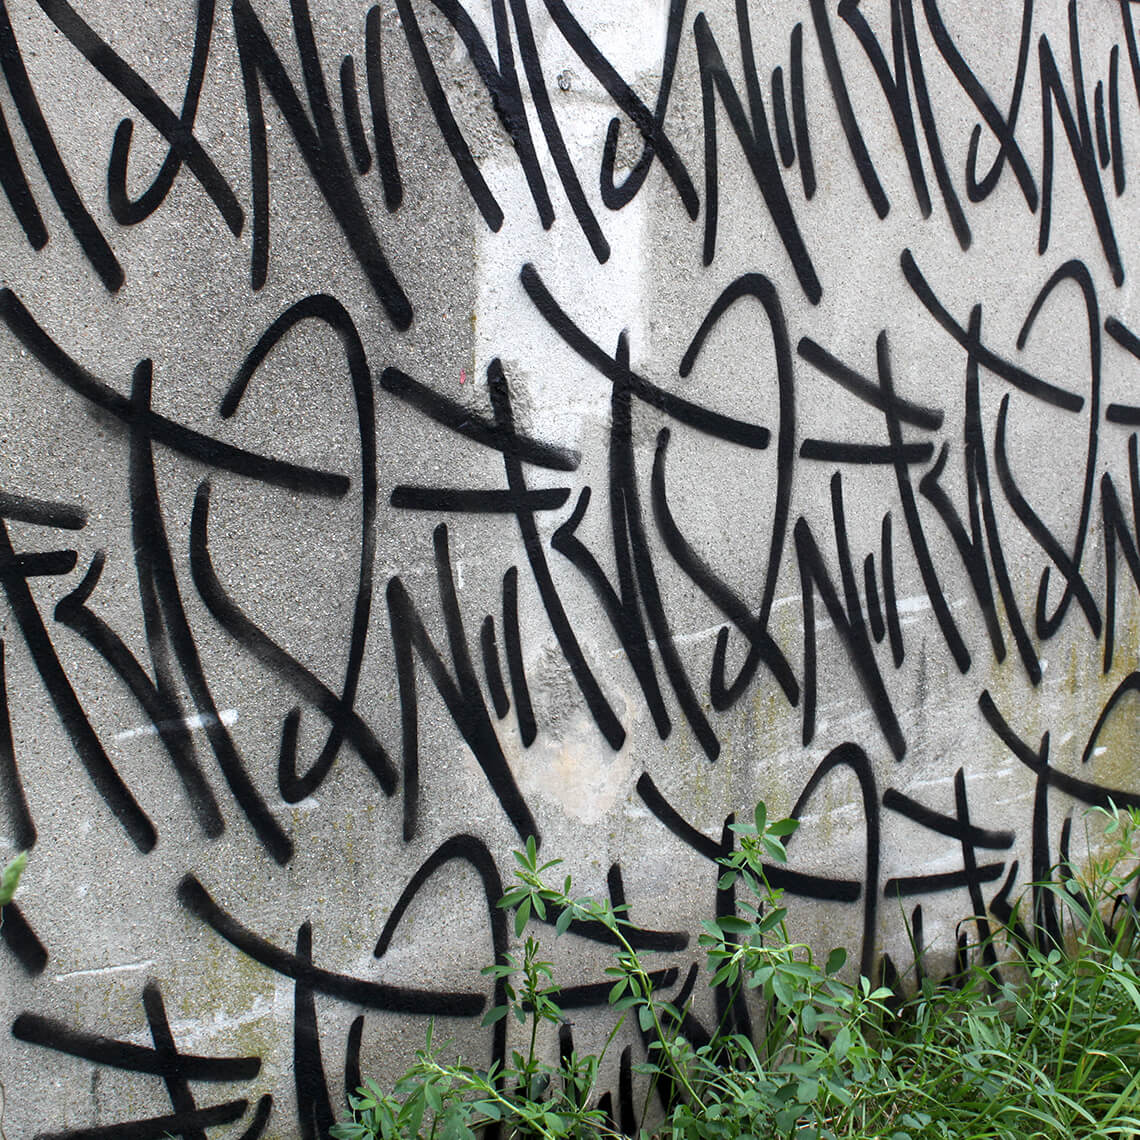 Street art motif graffiti